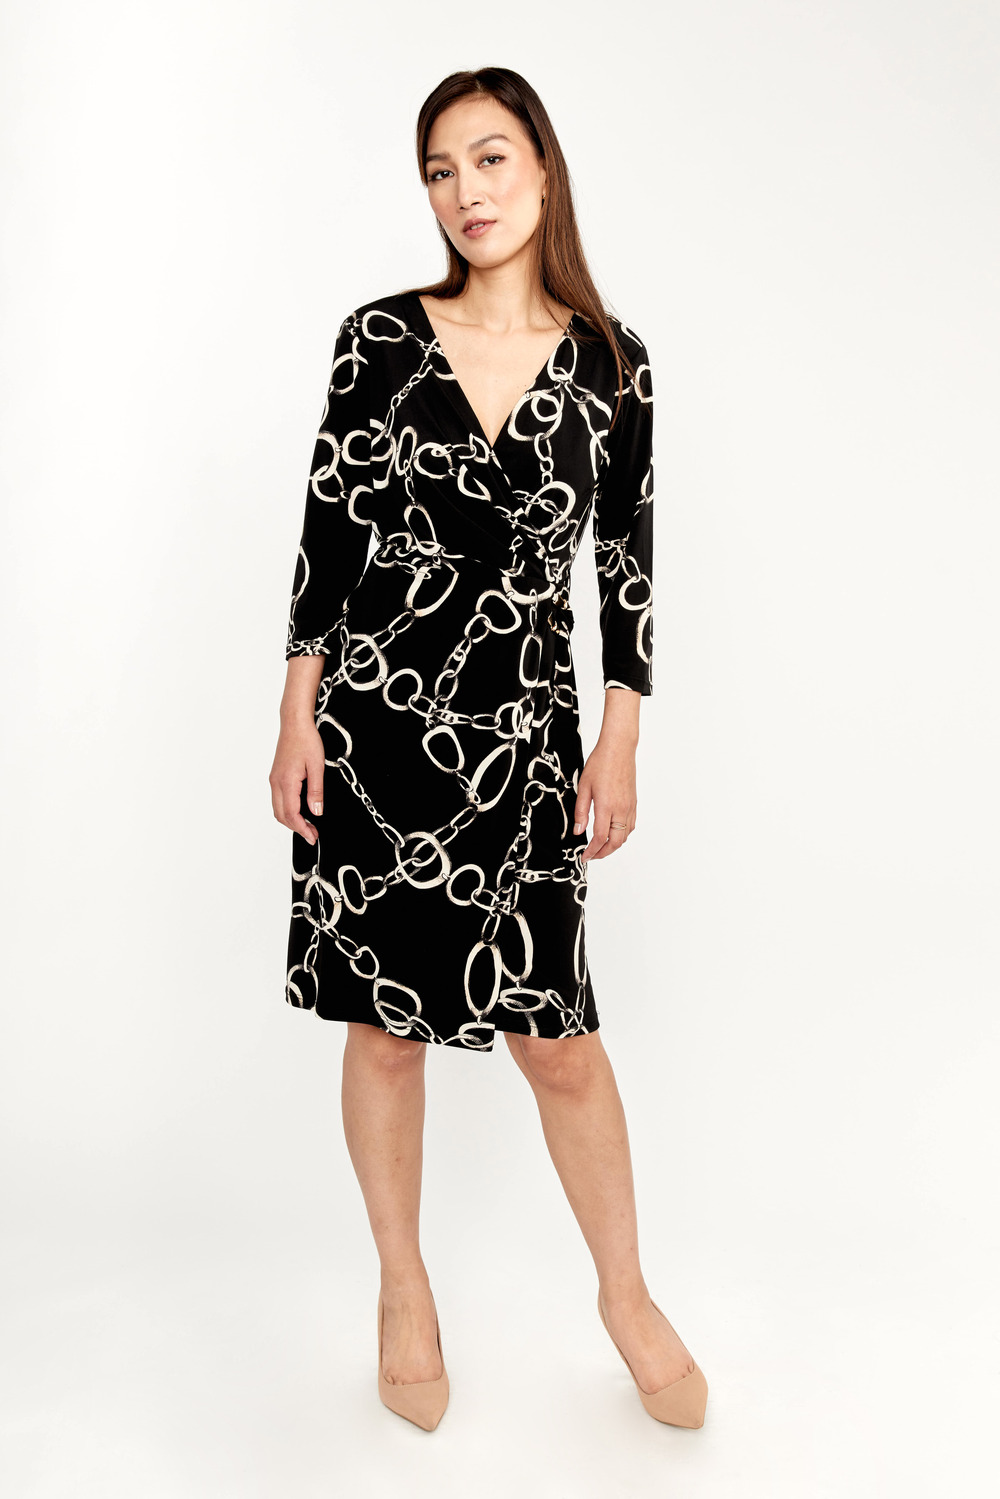 Chain Print Dress Style 233180. Black/beige